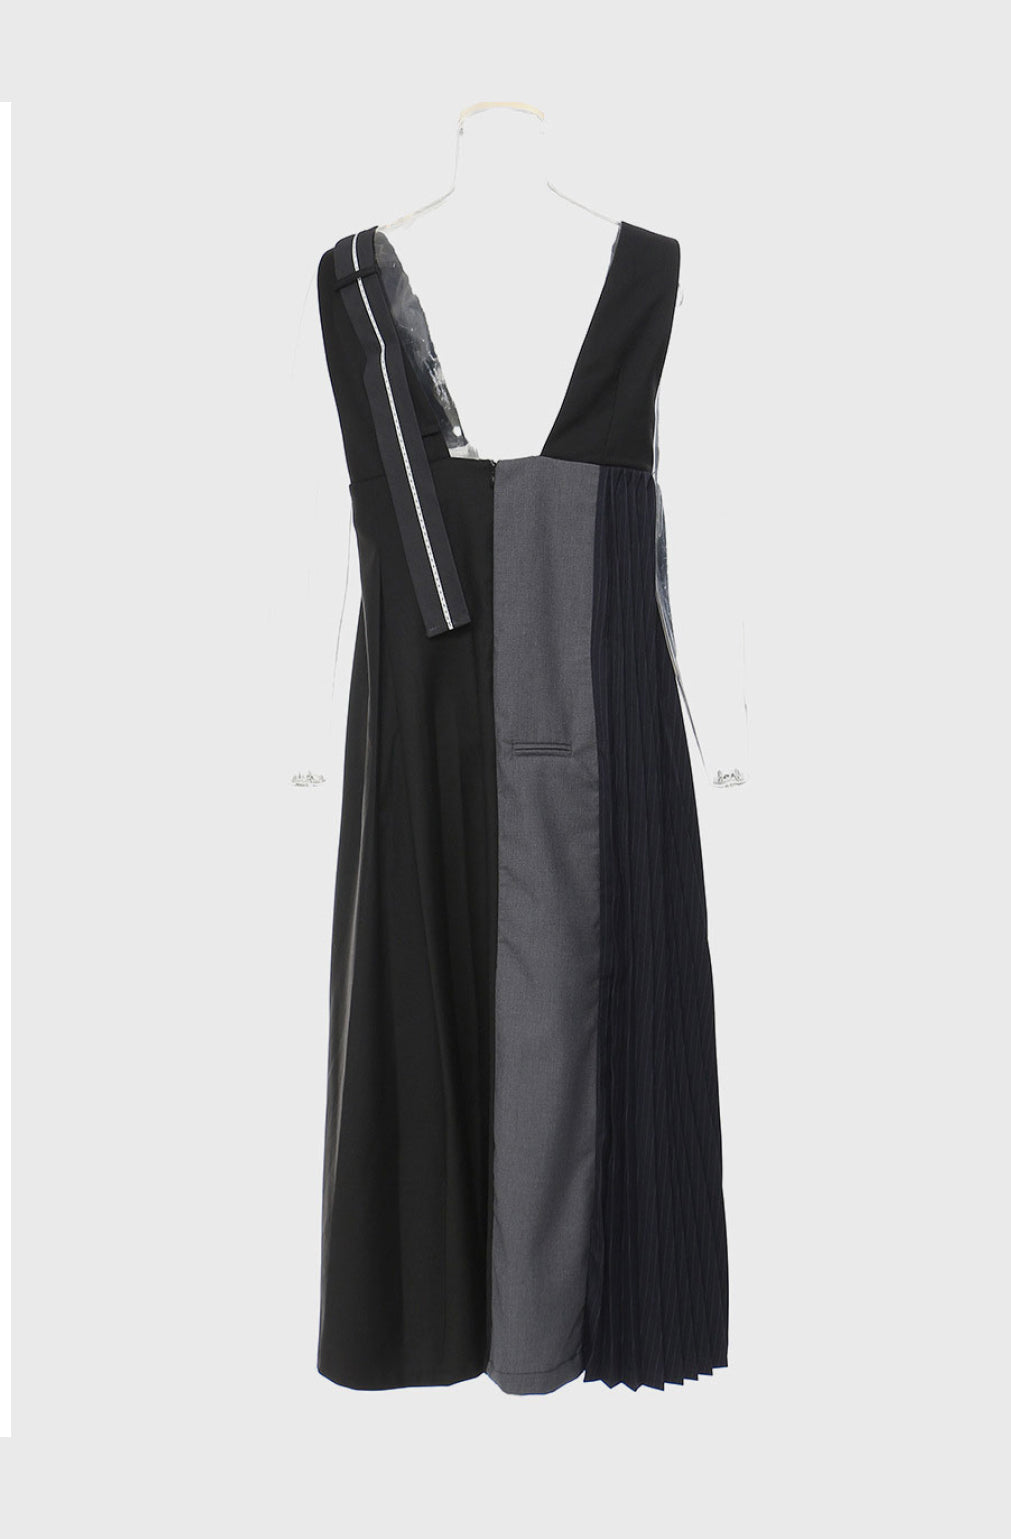 GAWQO Contrast Pleated Zip-Back Pinafore Dress